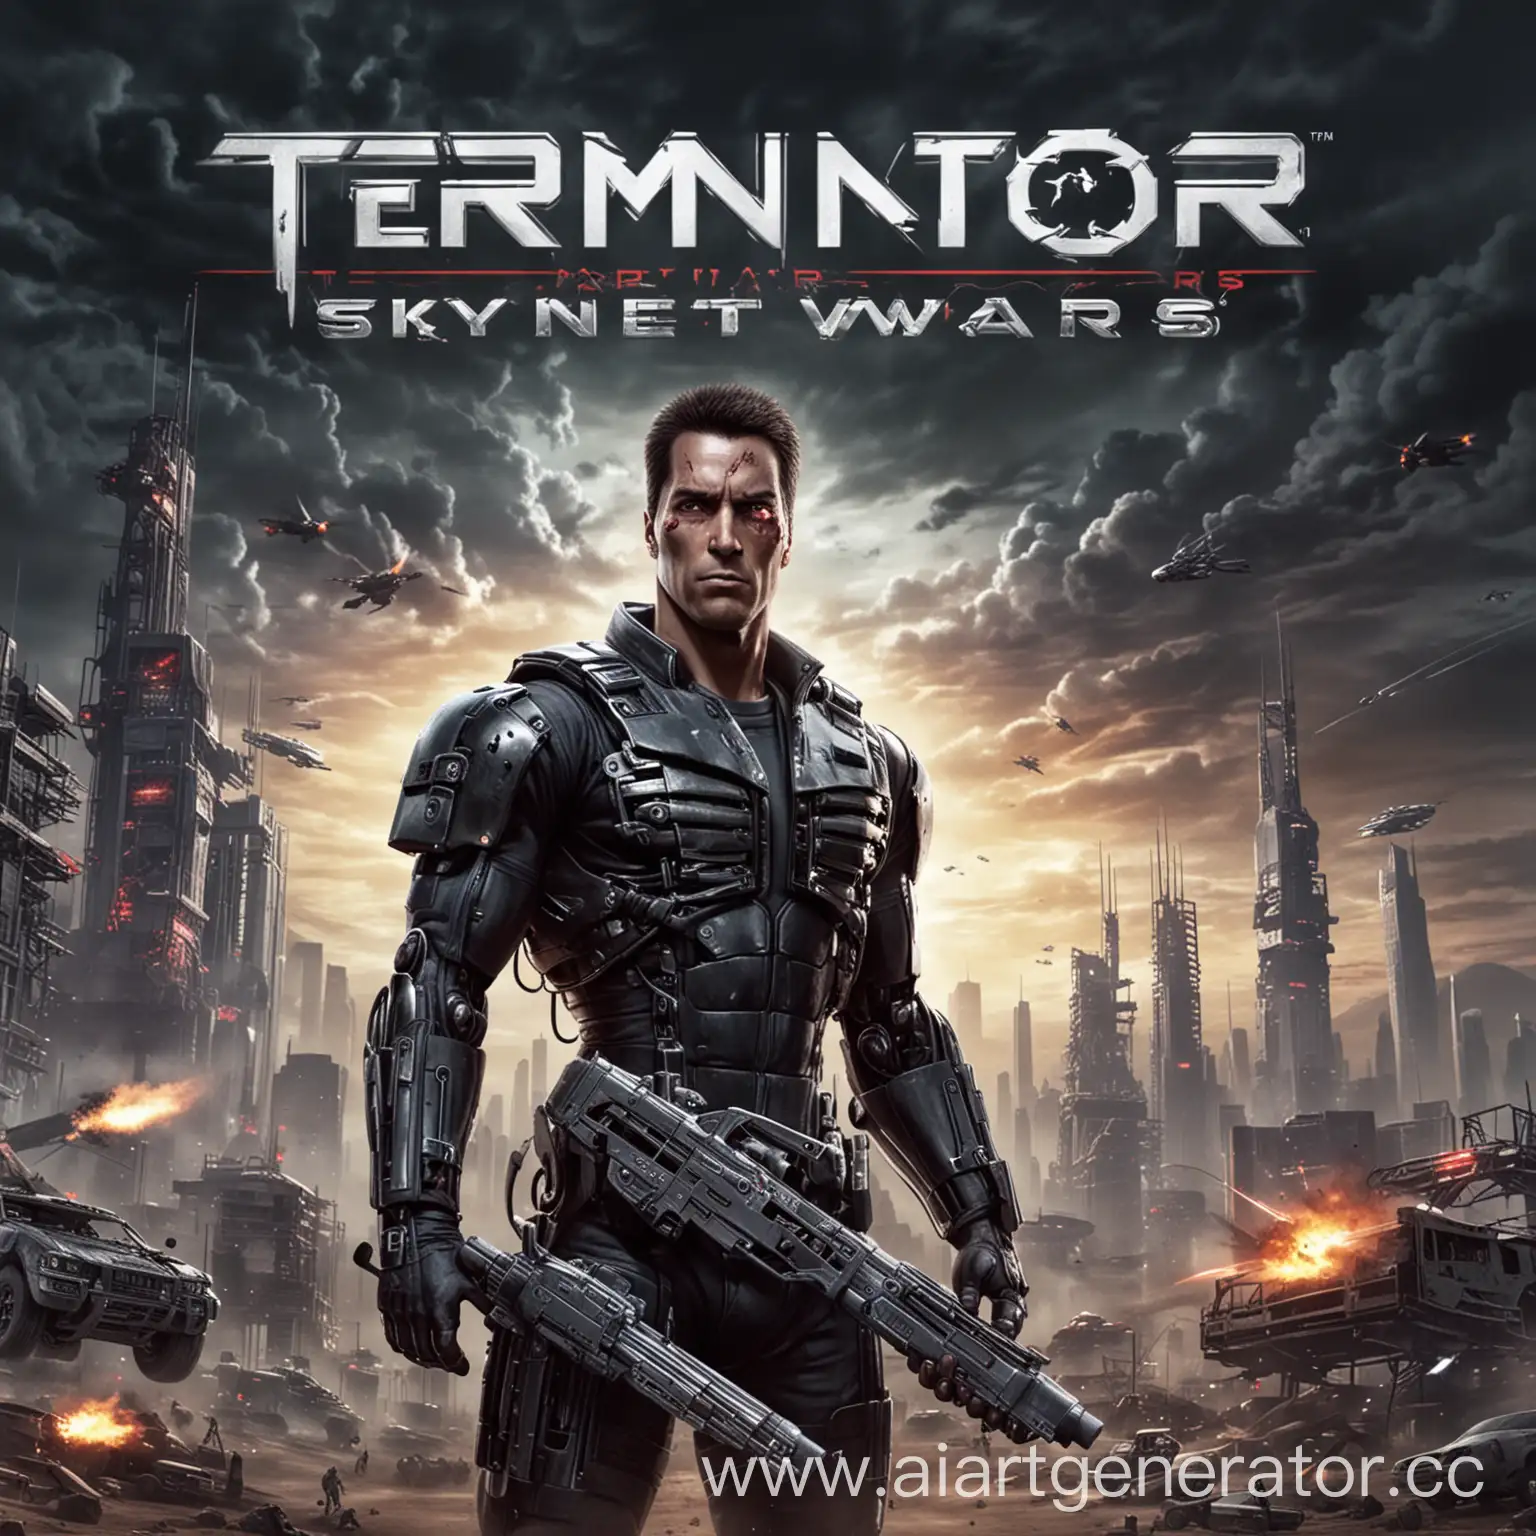 Terminator Skynet Wars, game cover, Ubisoft logo, 